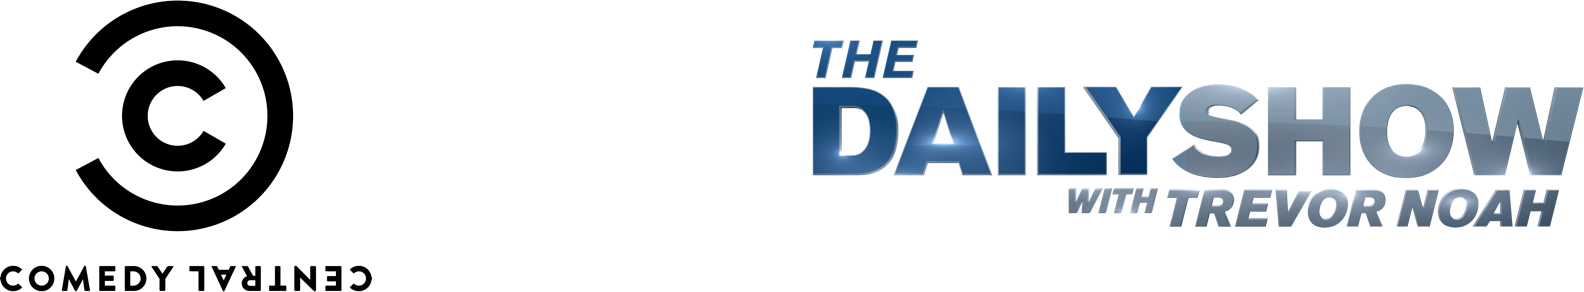 Daily show logos